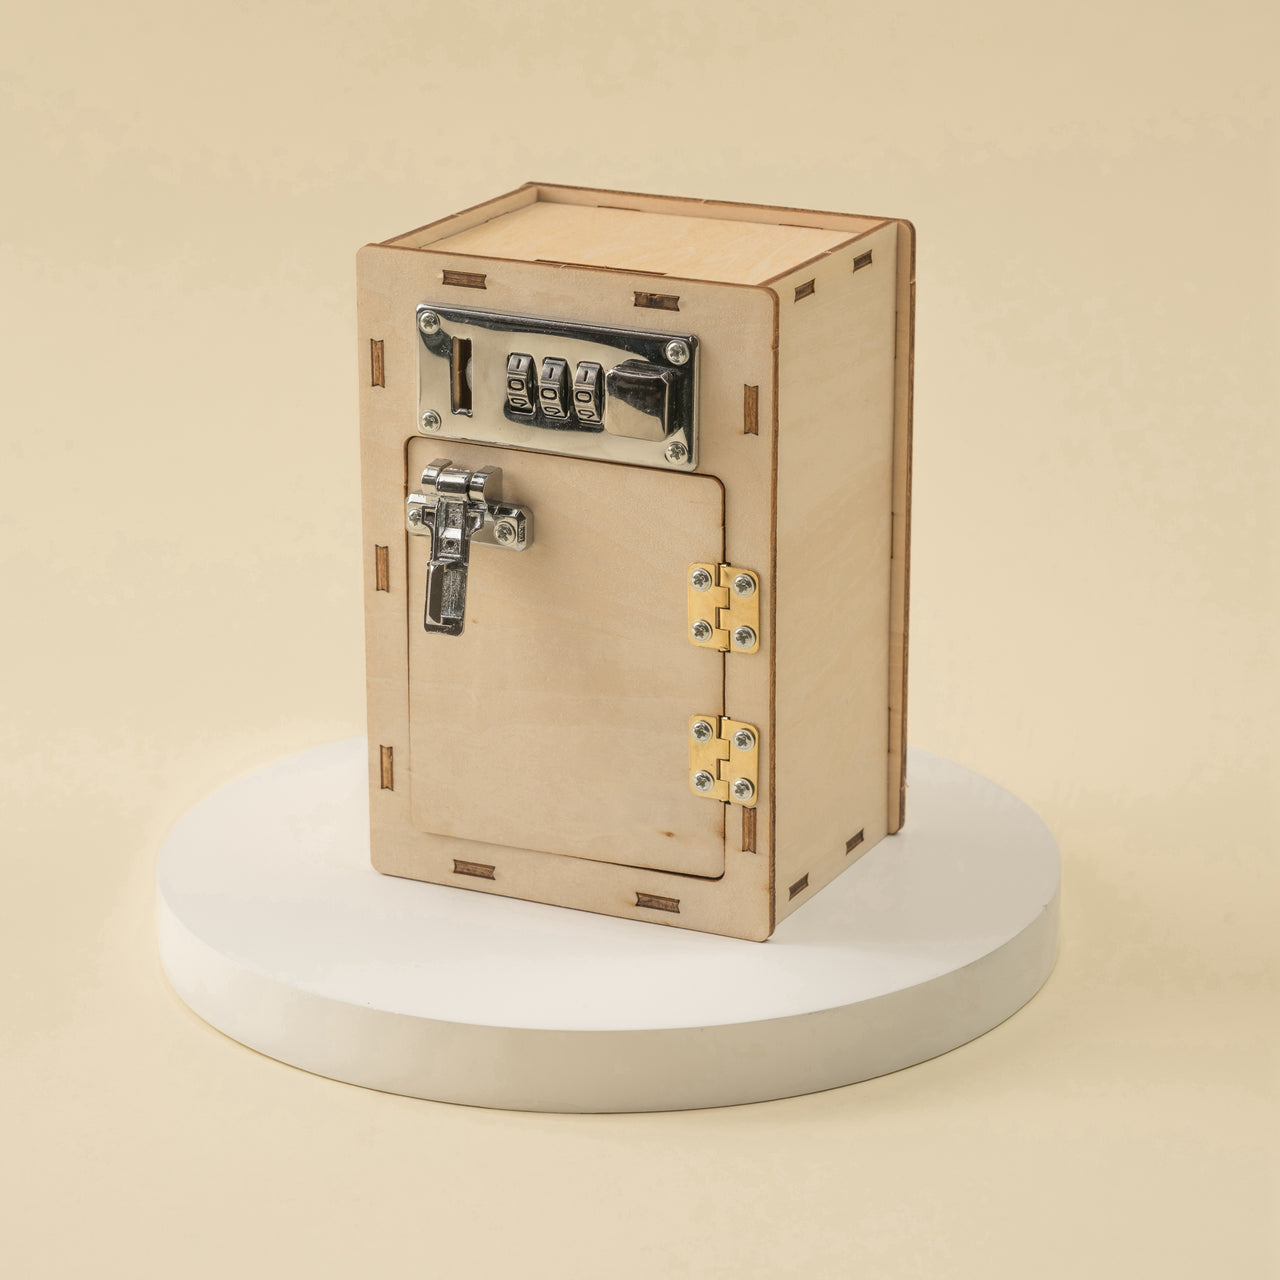 CreateKit Combination Lock Box DIY Kit